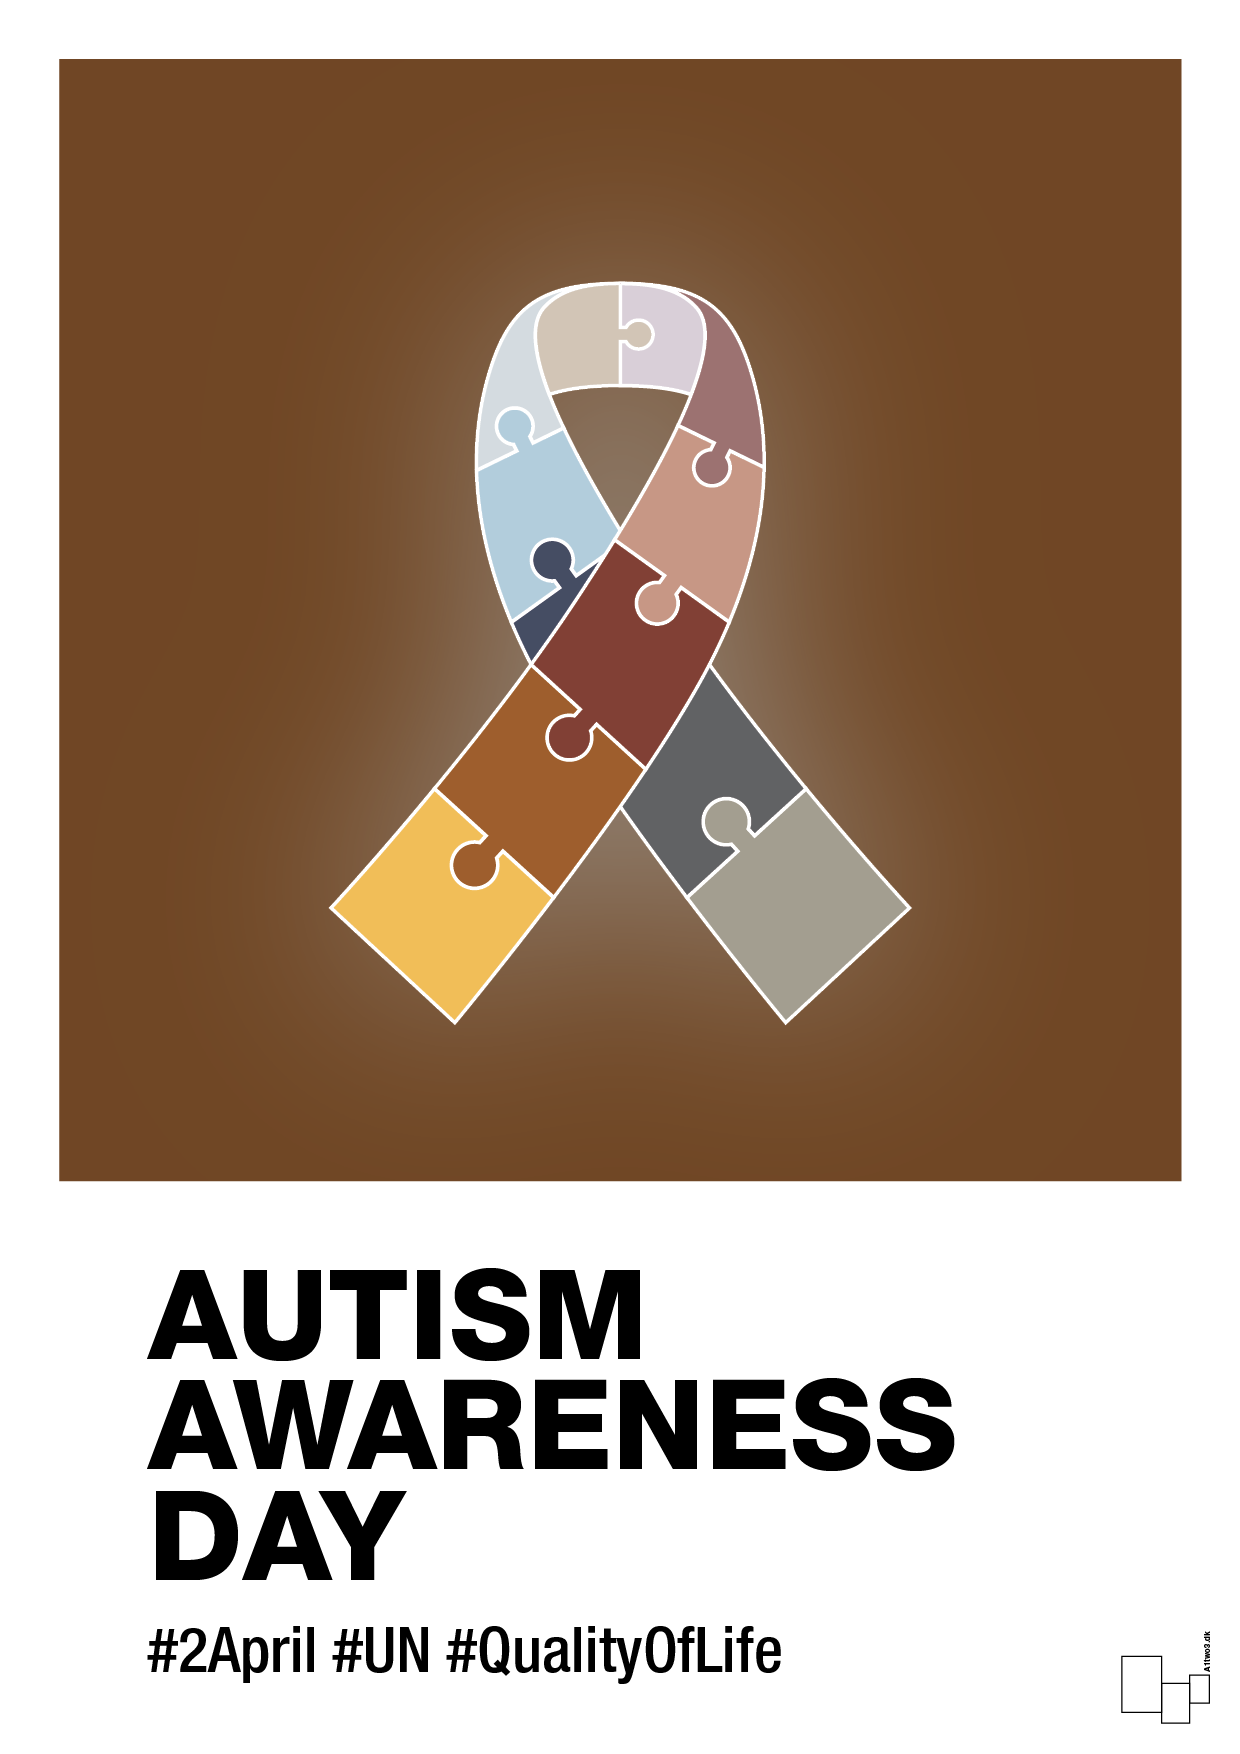 autism awareness day in fullcolor - Plakat med Samfund i Dark Brown